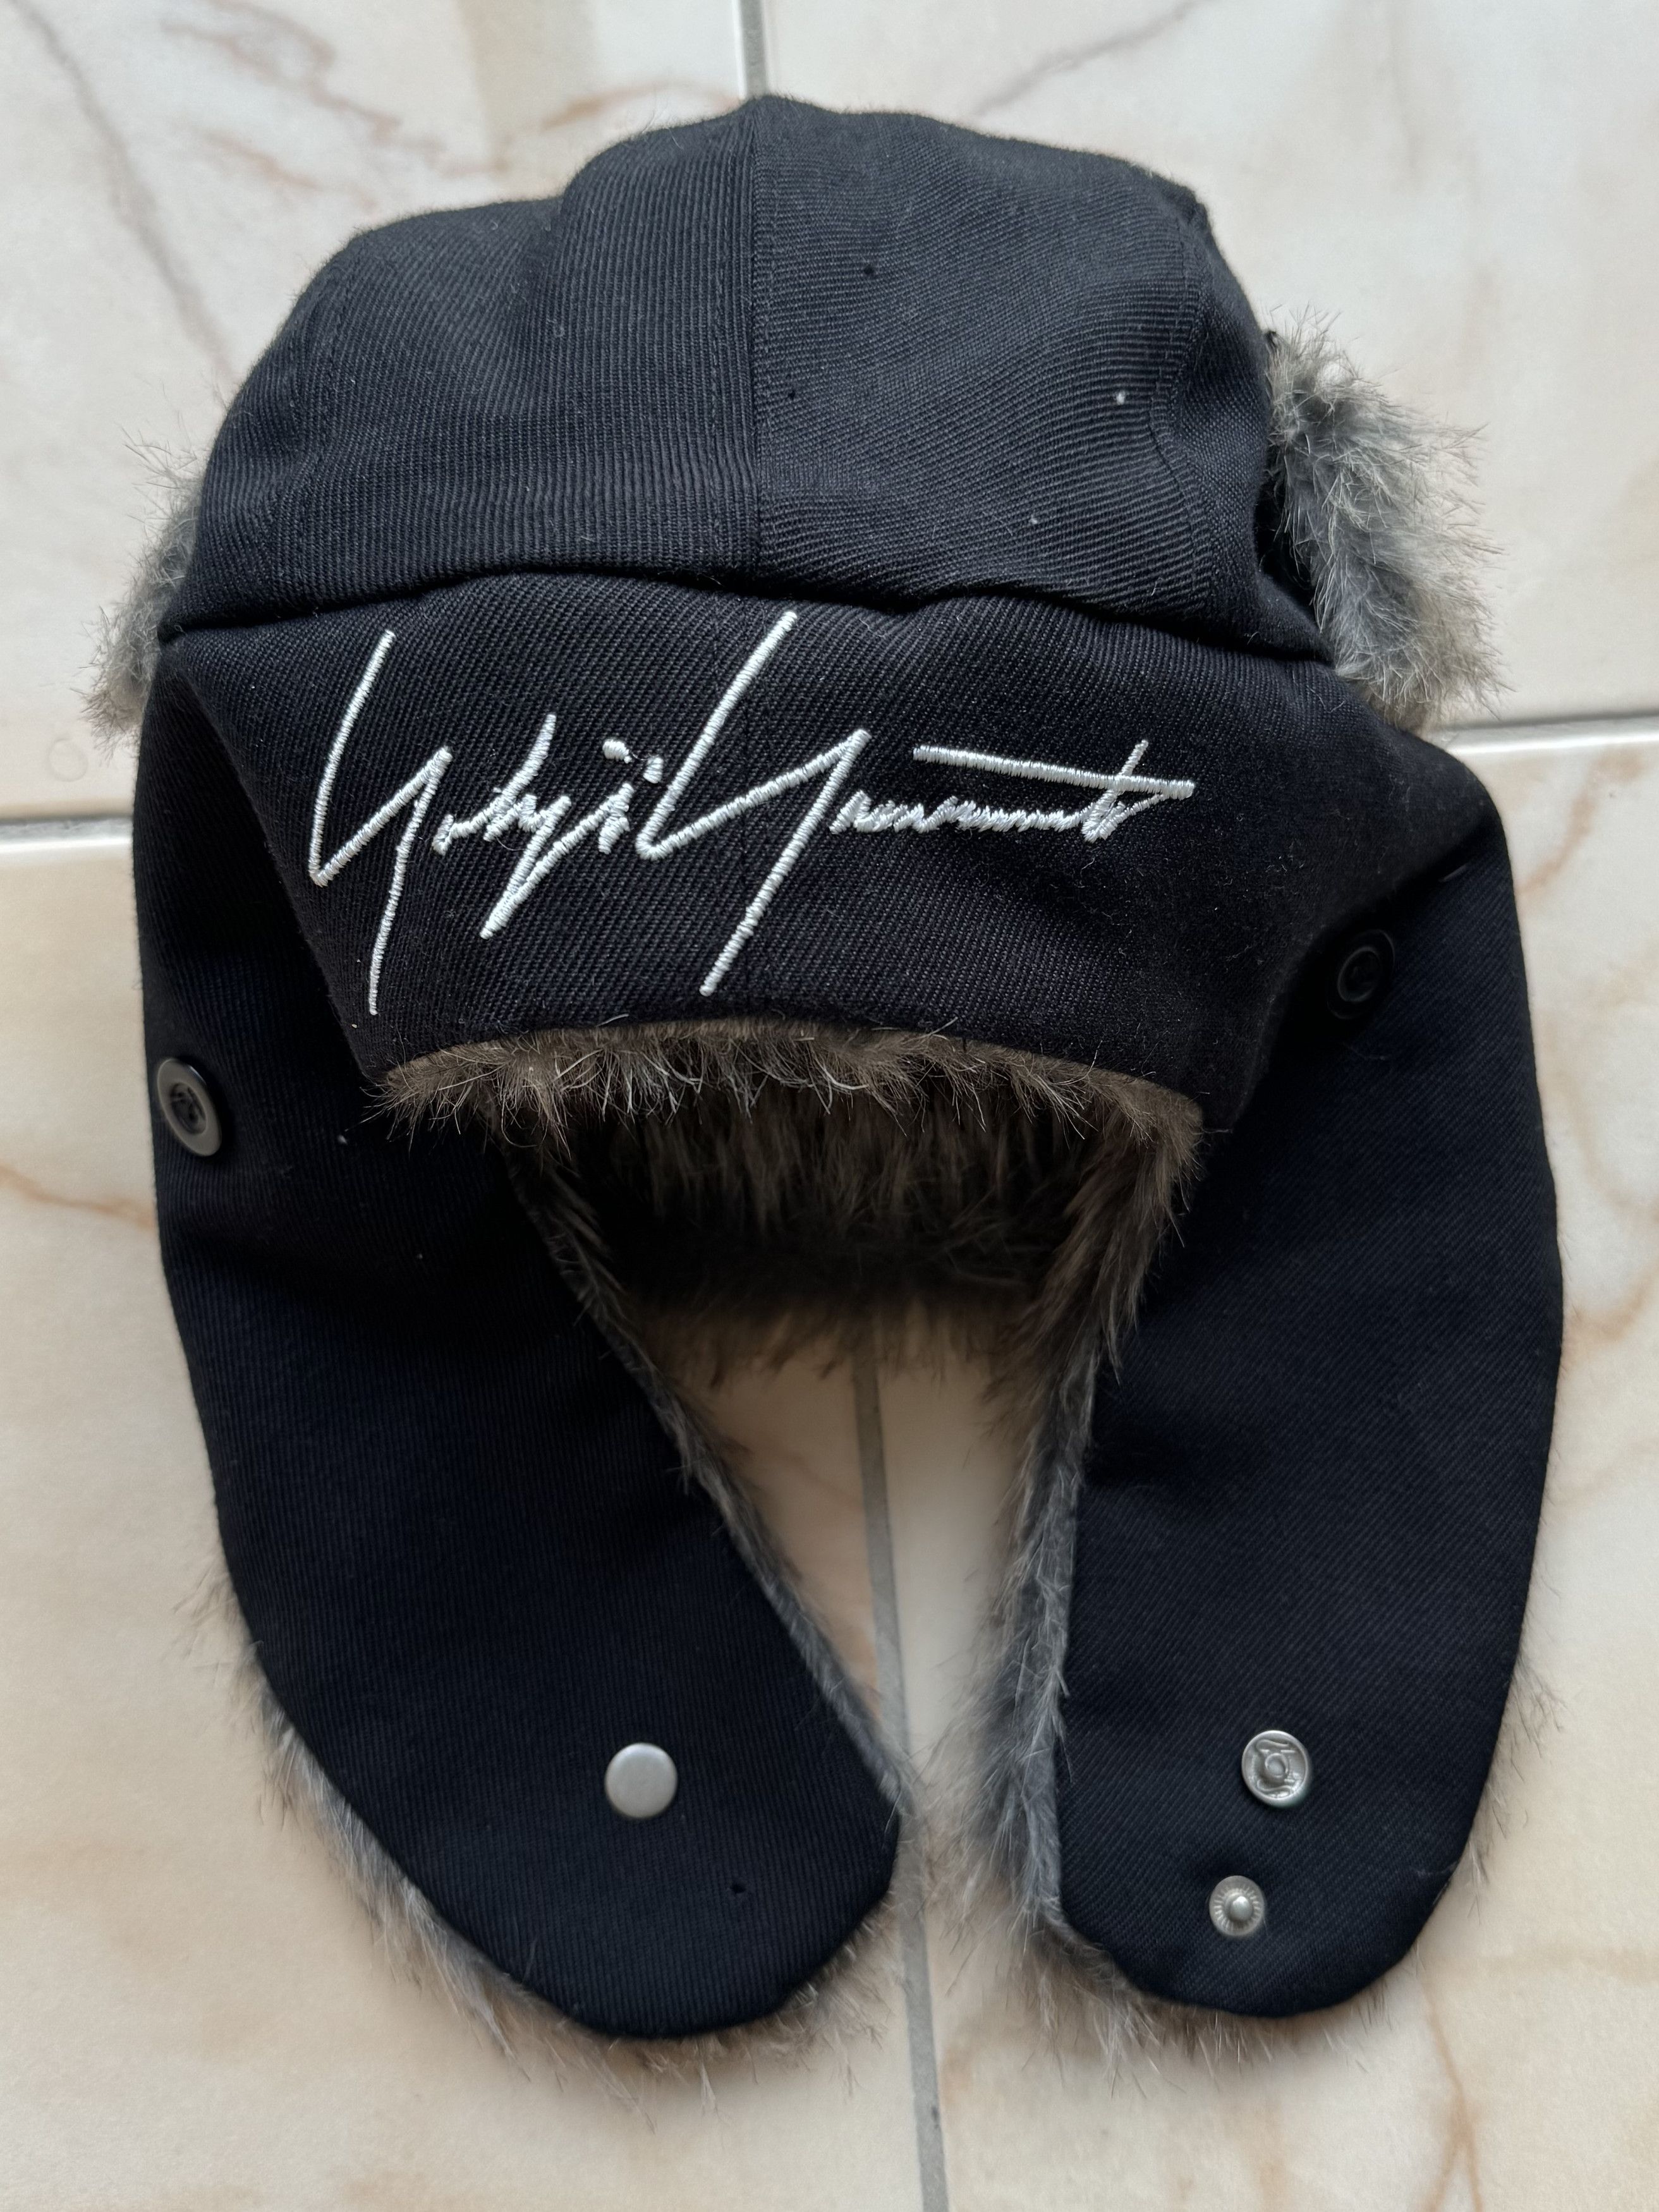 Yohji Yamamoto Yohji Yamamoto x New Era Embroidered Trapper Hat in Black |  Grailed